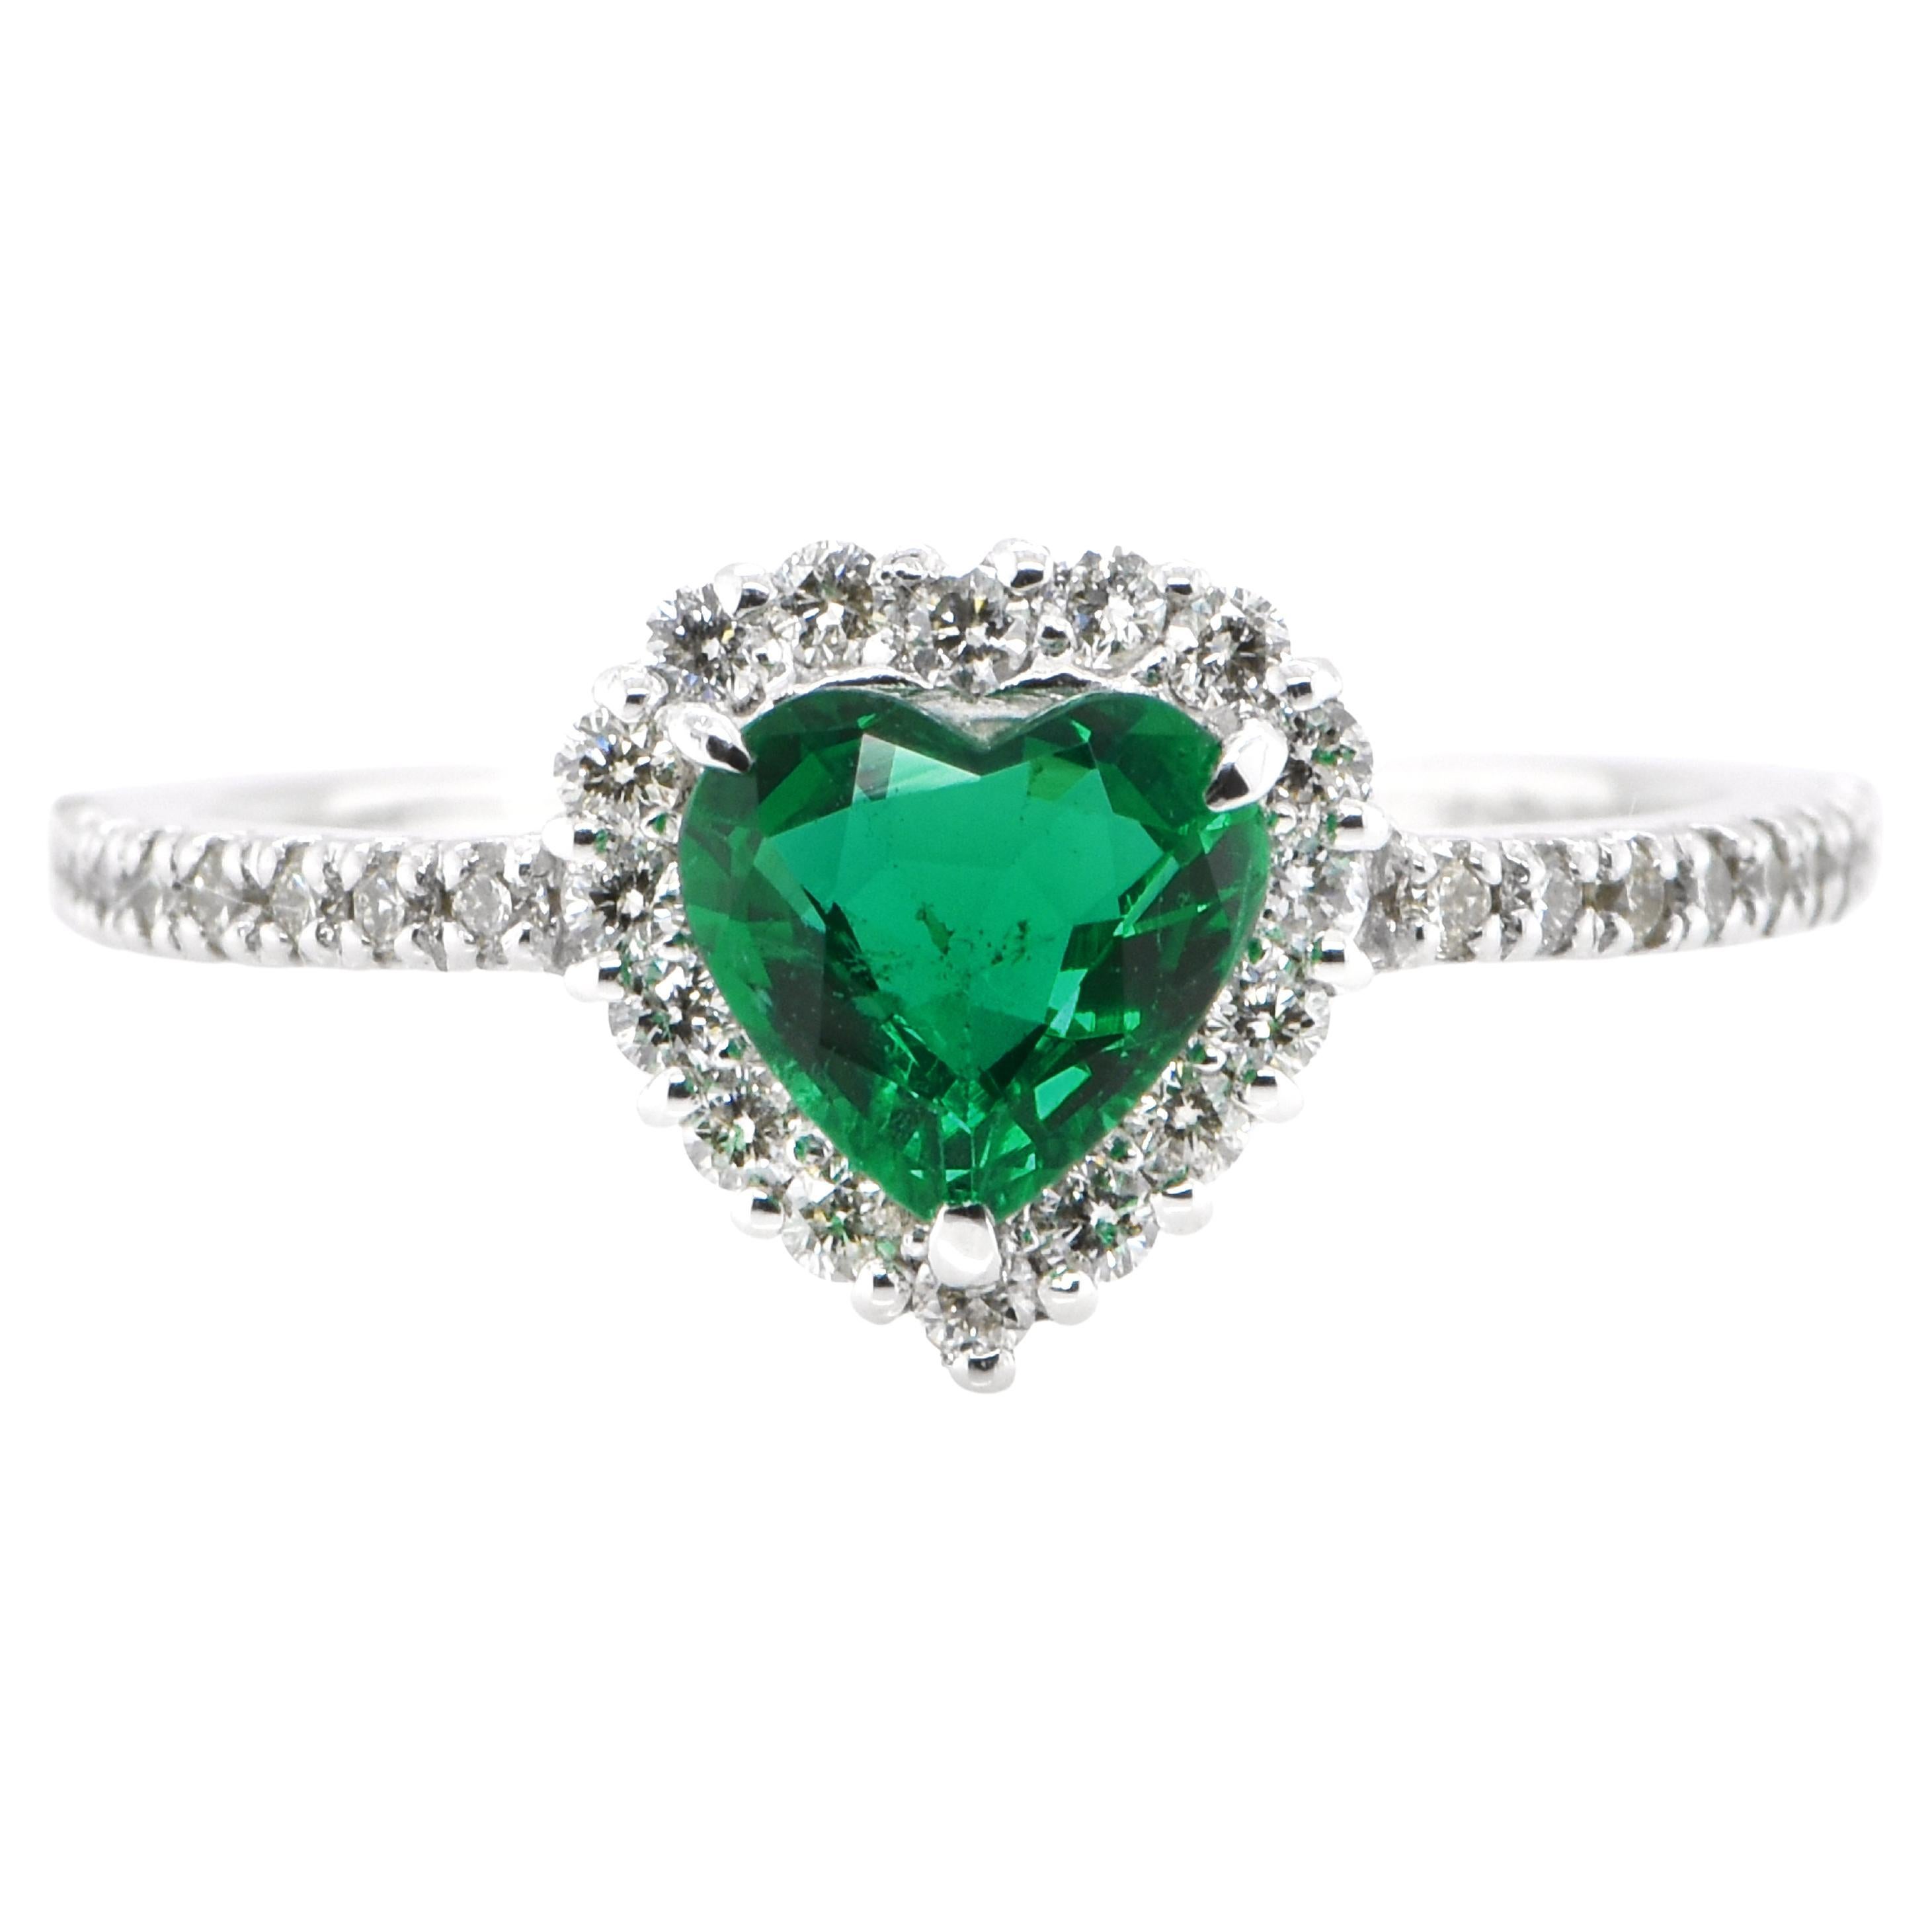  0.63 Carat Natural, Heart-Cut, Zambian Emerald & Diamond Ring Set in Platinum